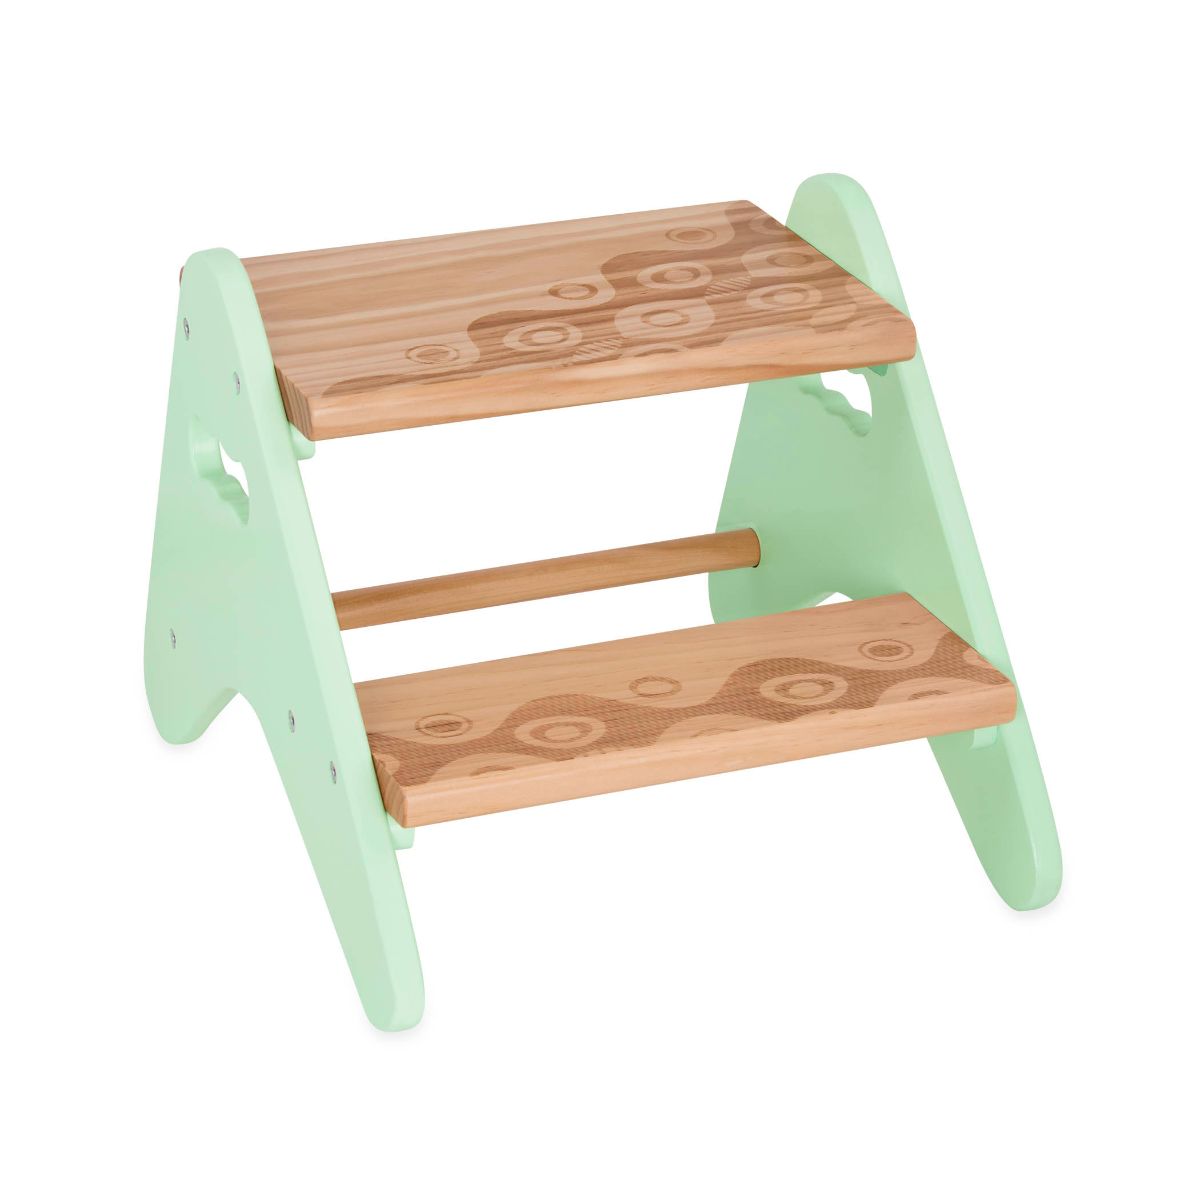 Wooden mint step stool